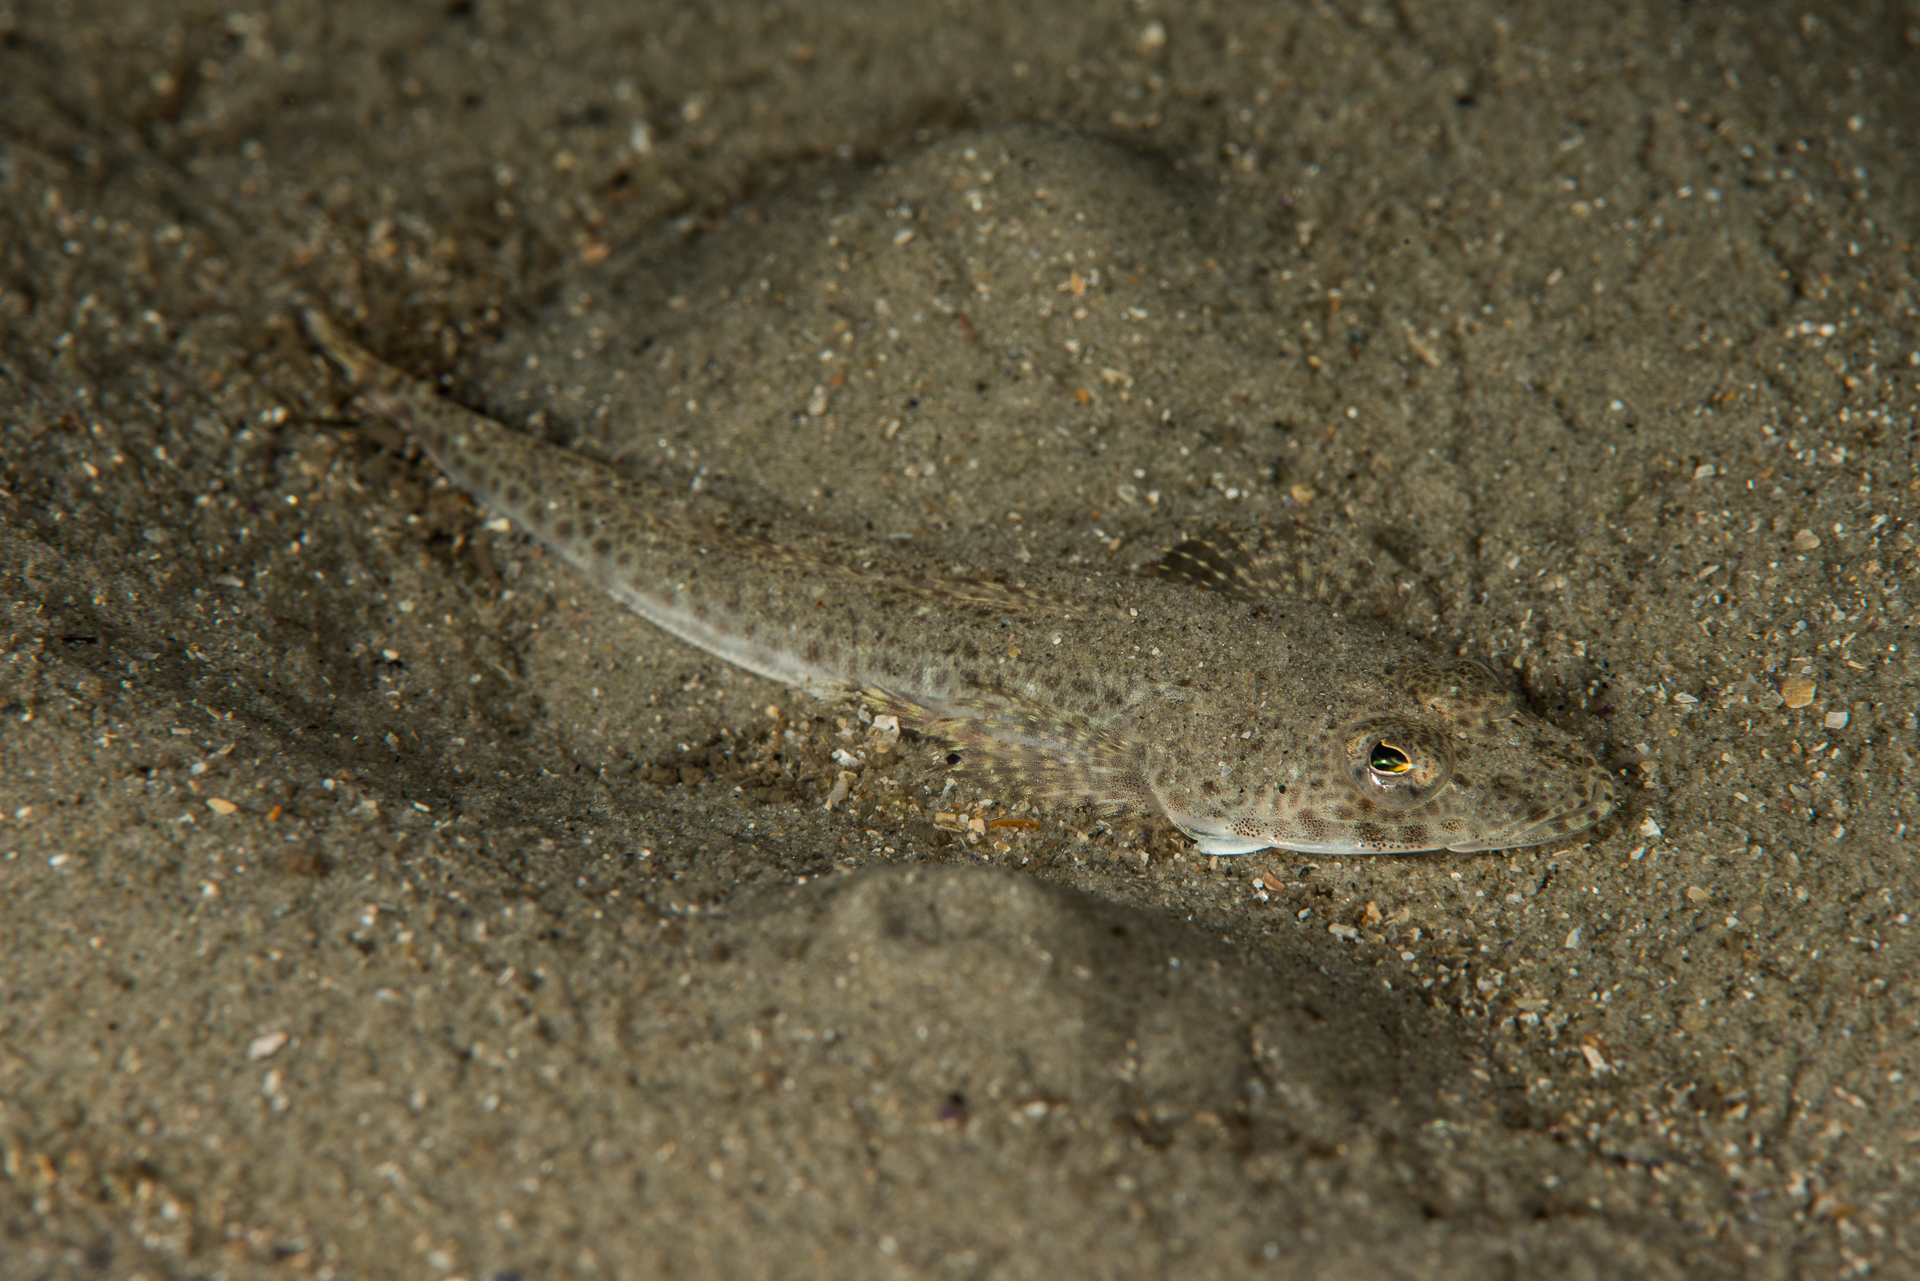 Platycephalus bassensis: southern sand flathead